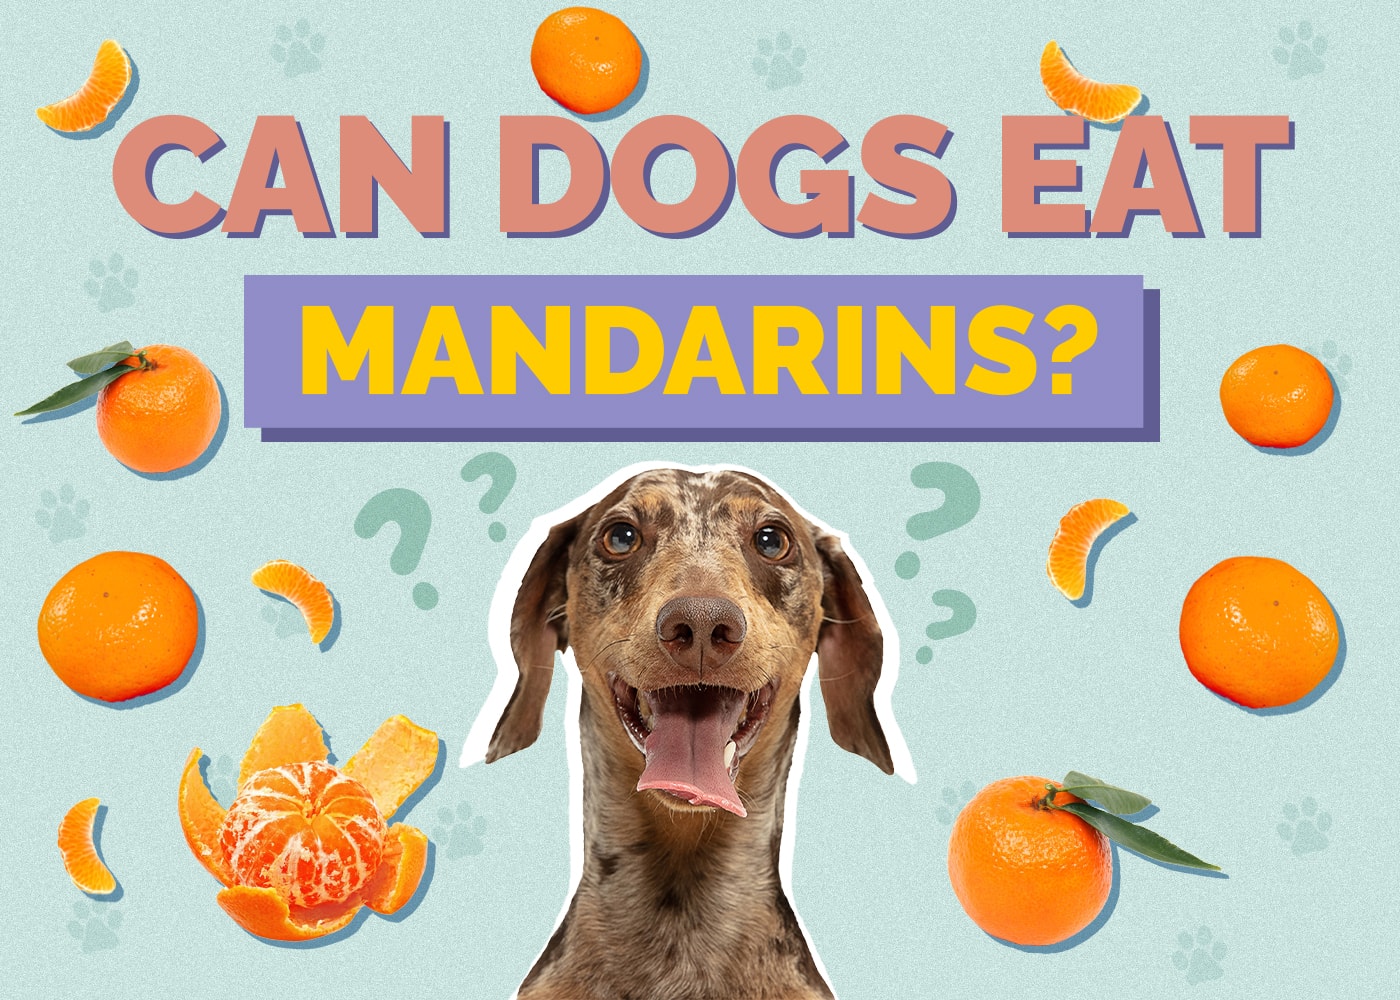 Can Dogs Eat mandarins